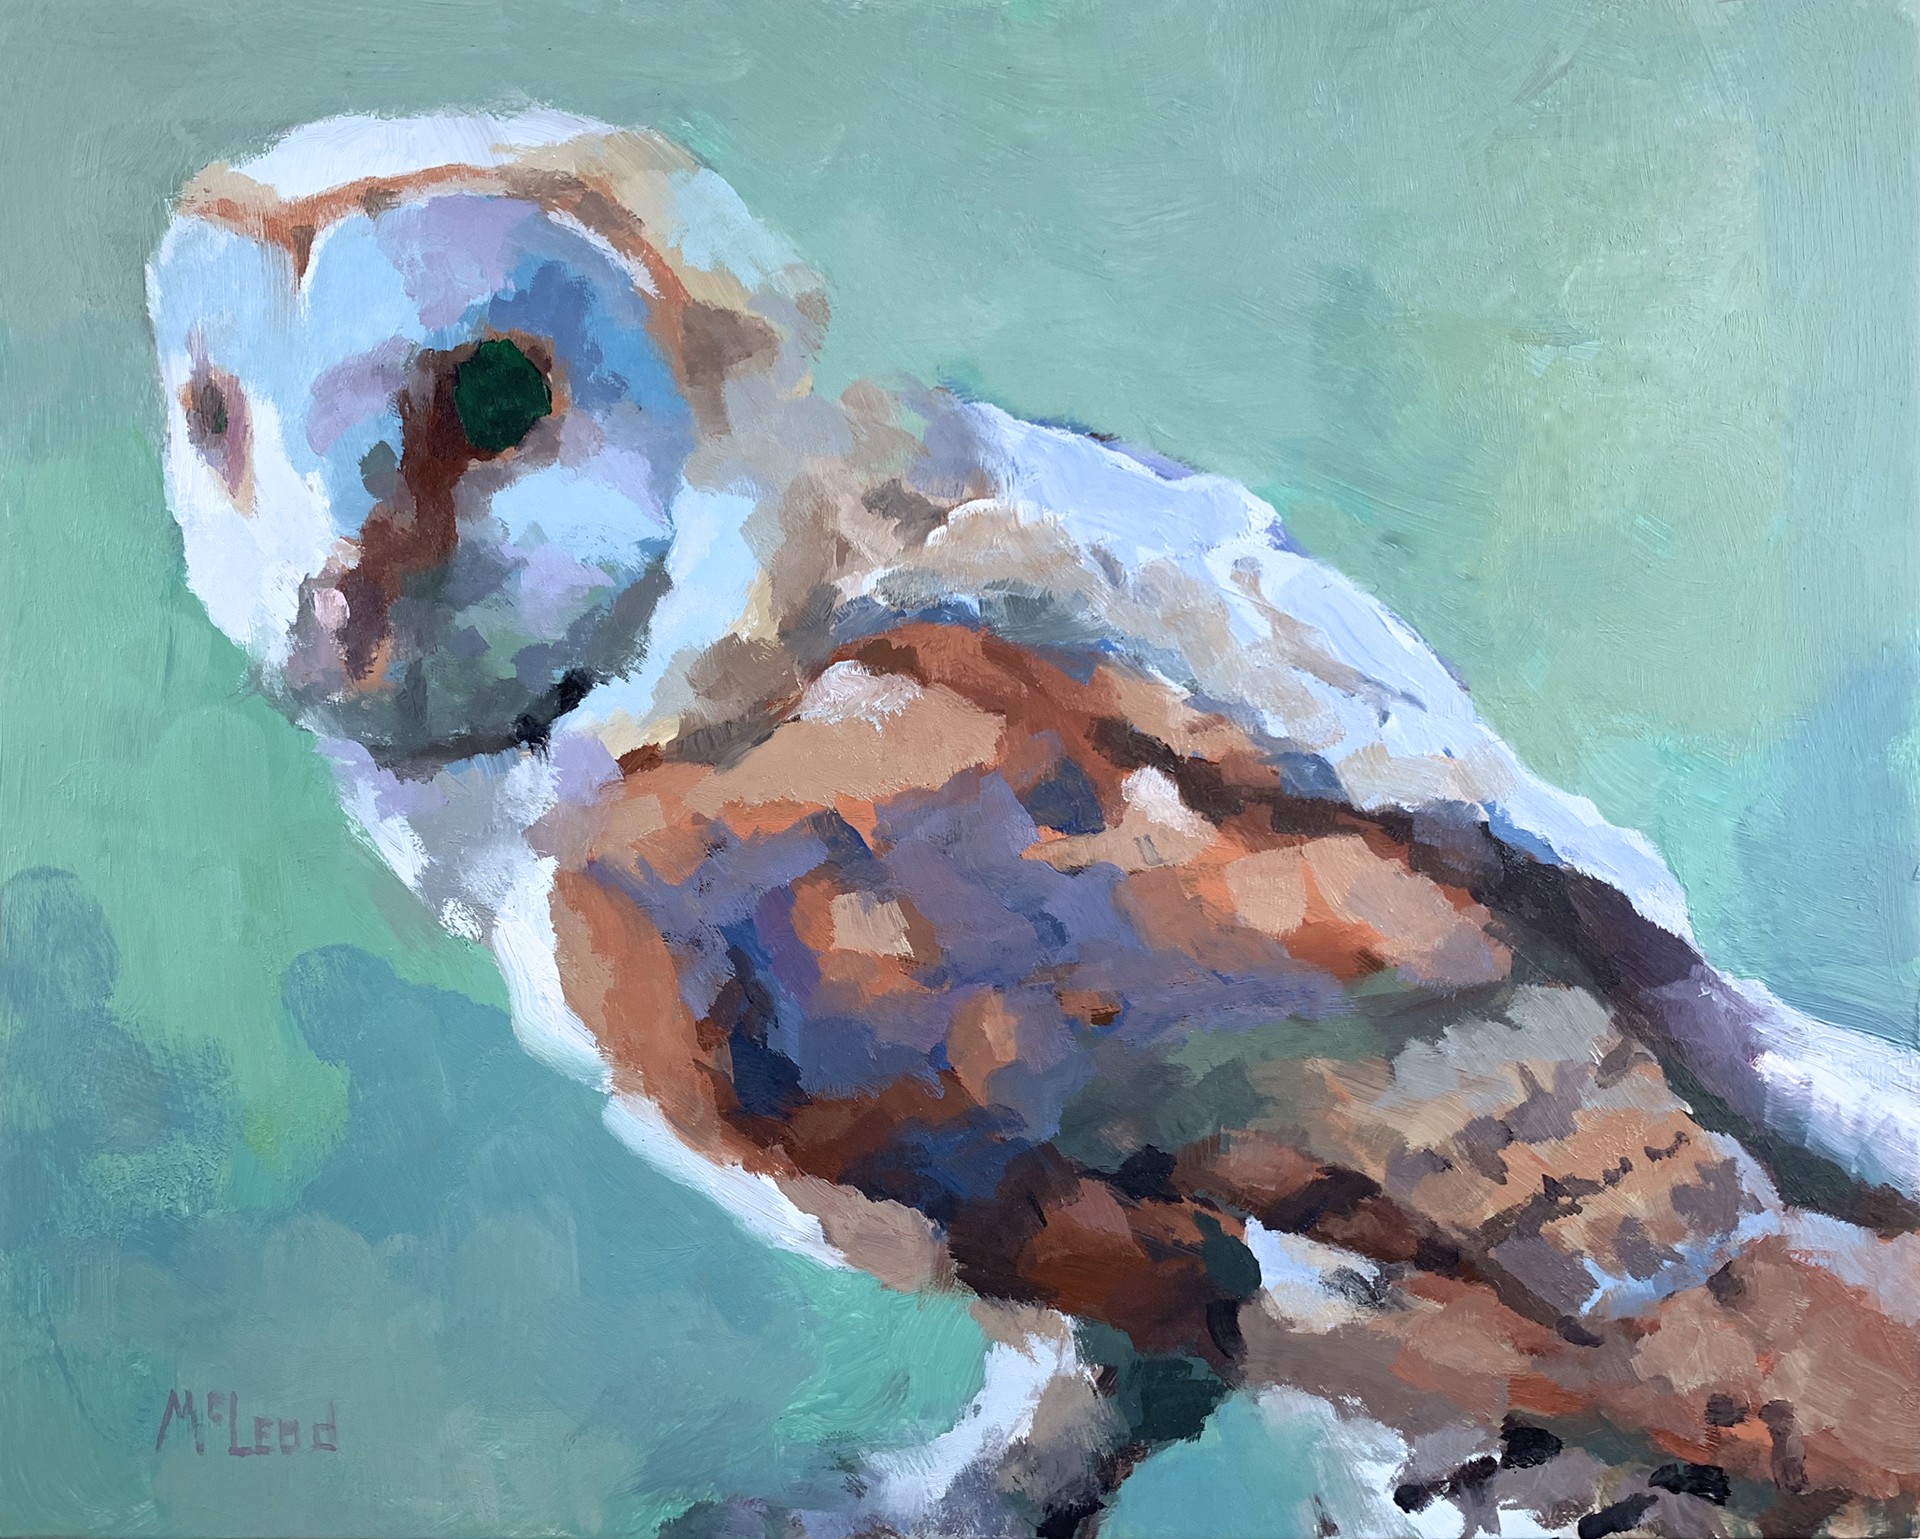 Barn Owl by John McLeod